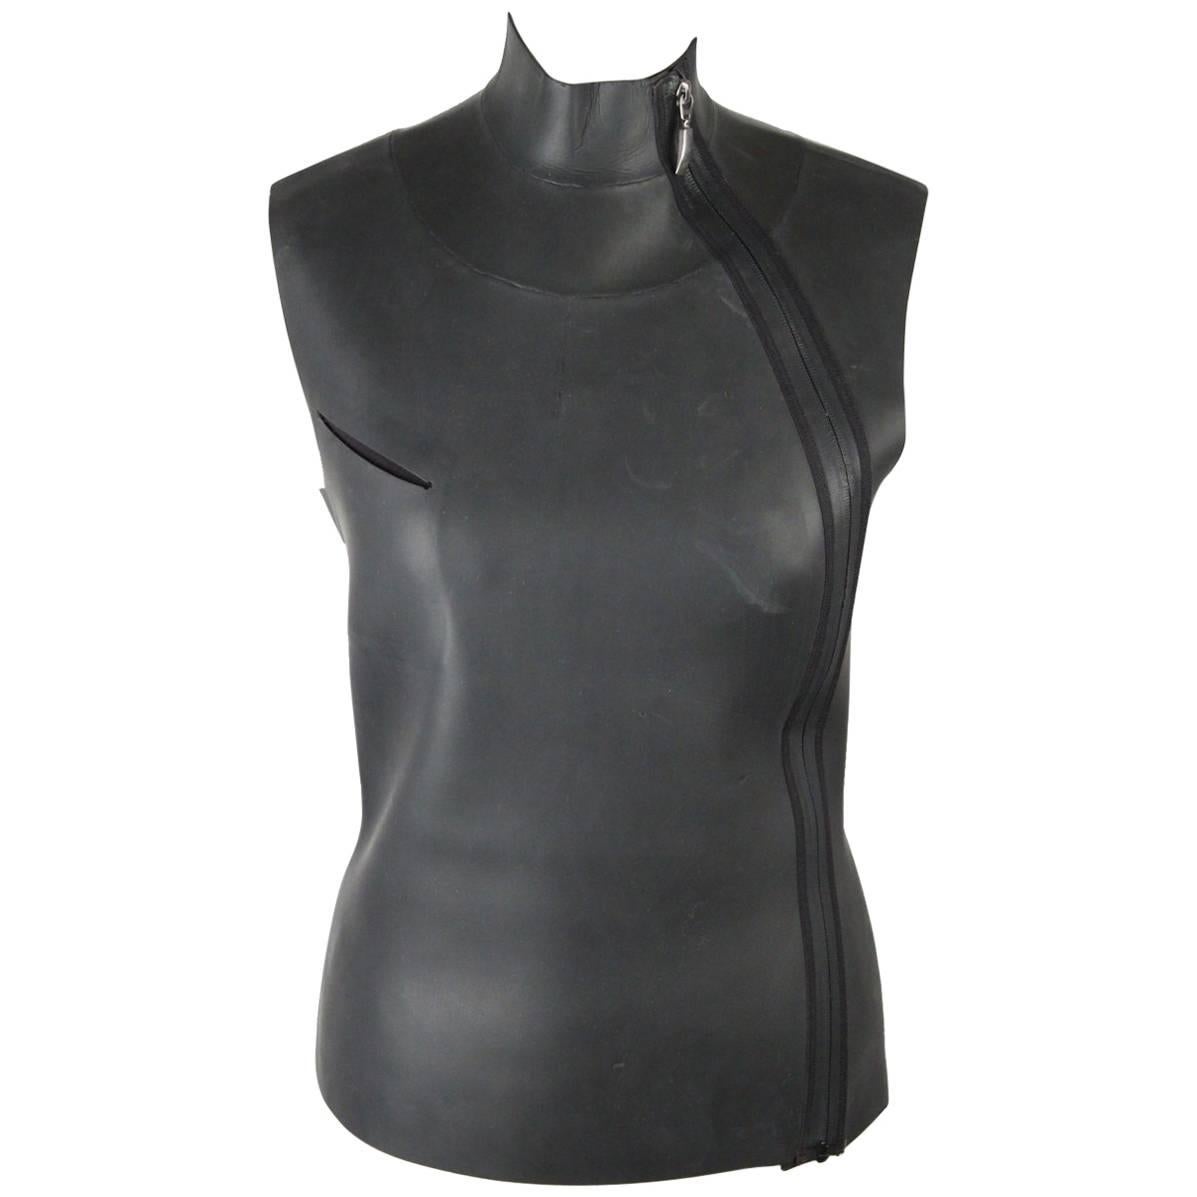 Jean Paul Gaultier Black Neoprene Vest Sleeveless Top Size 42